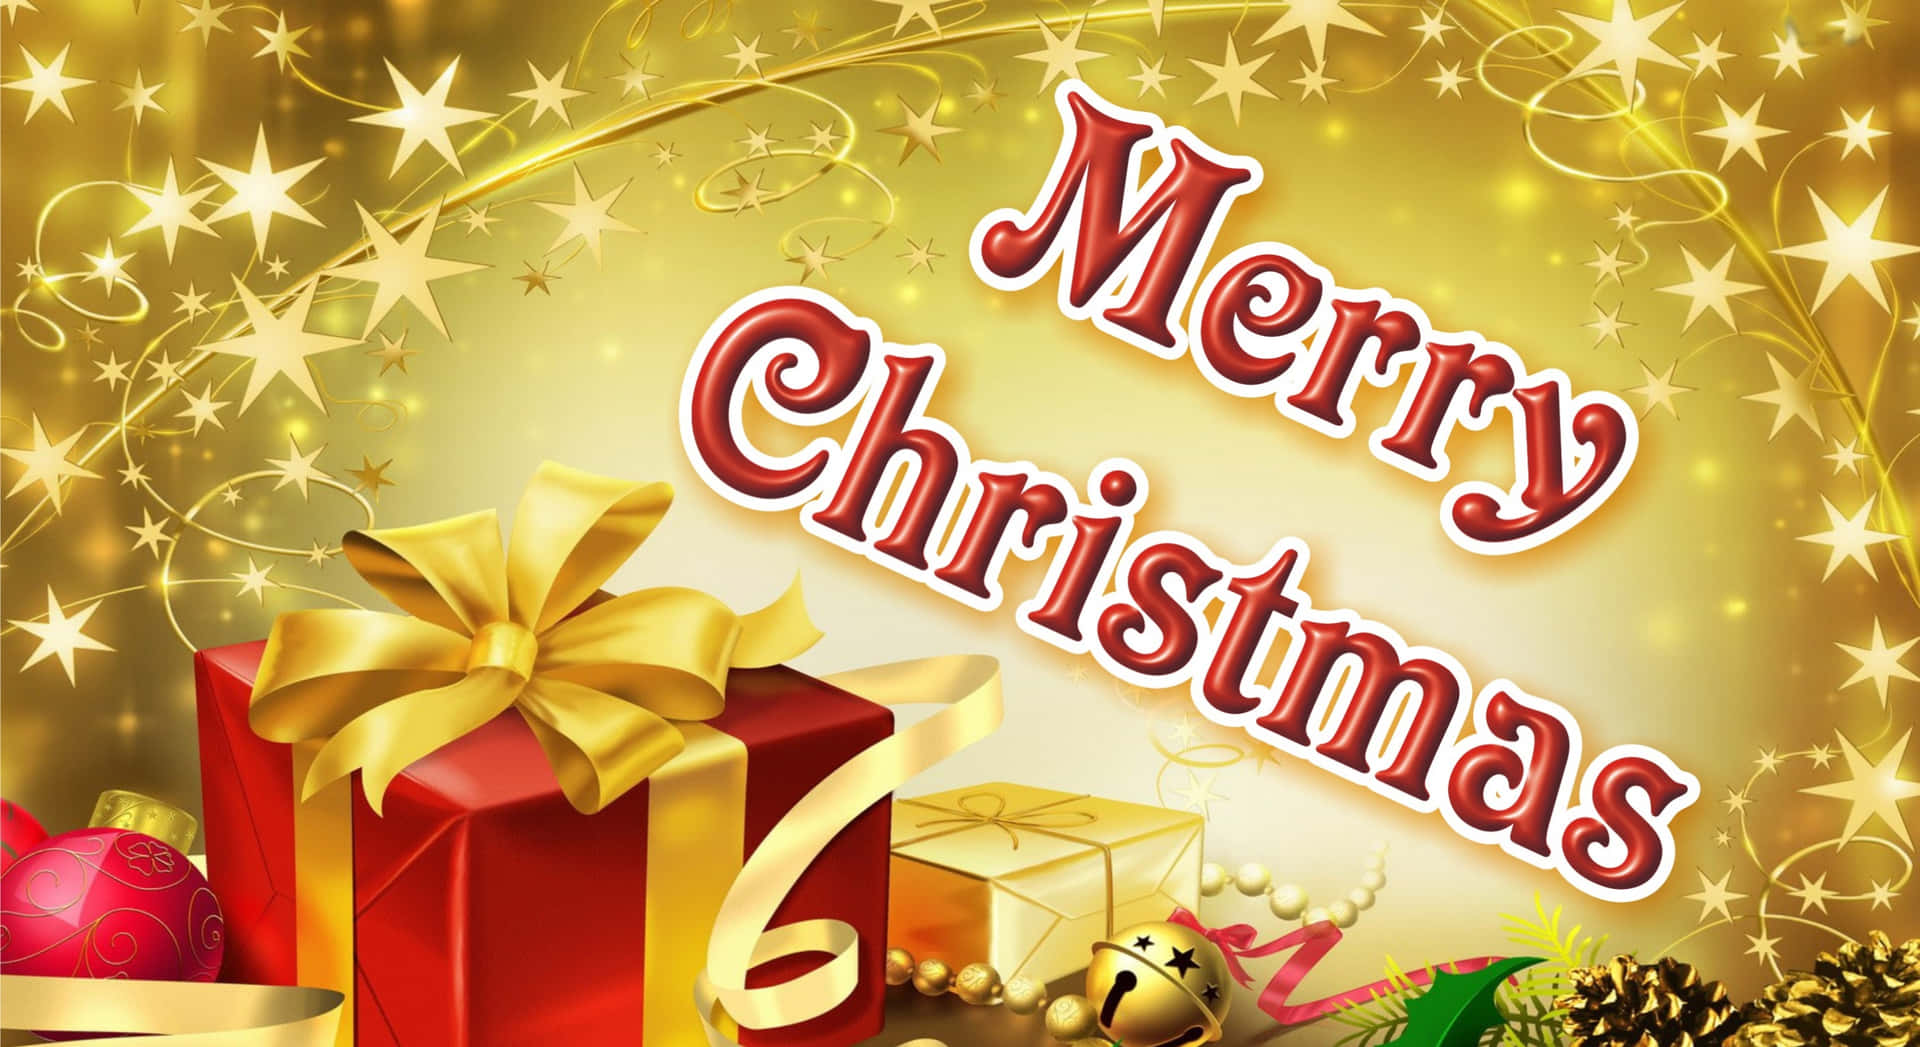 Wishing you a Merry Christmas and a joyous holiday season!